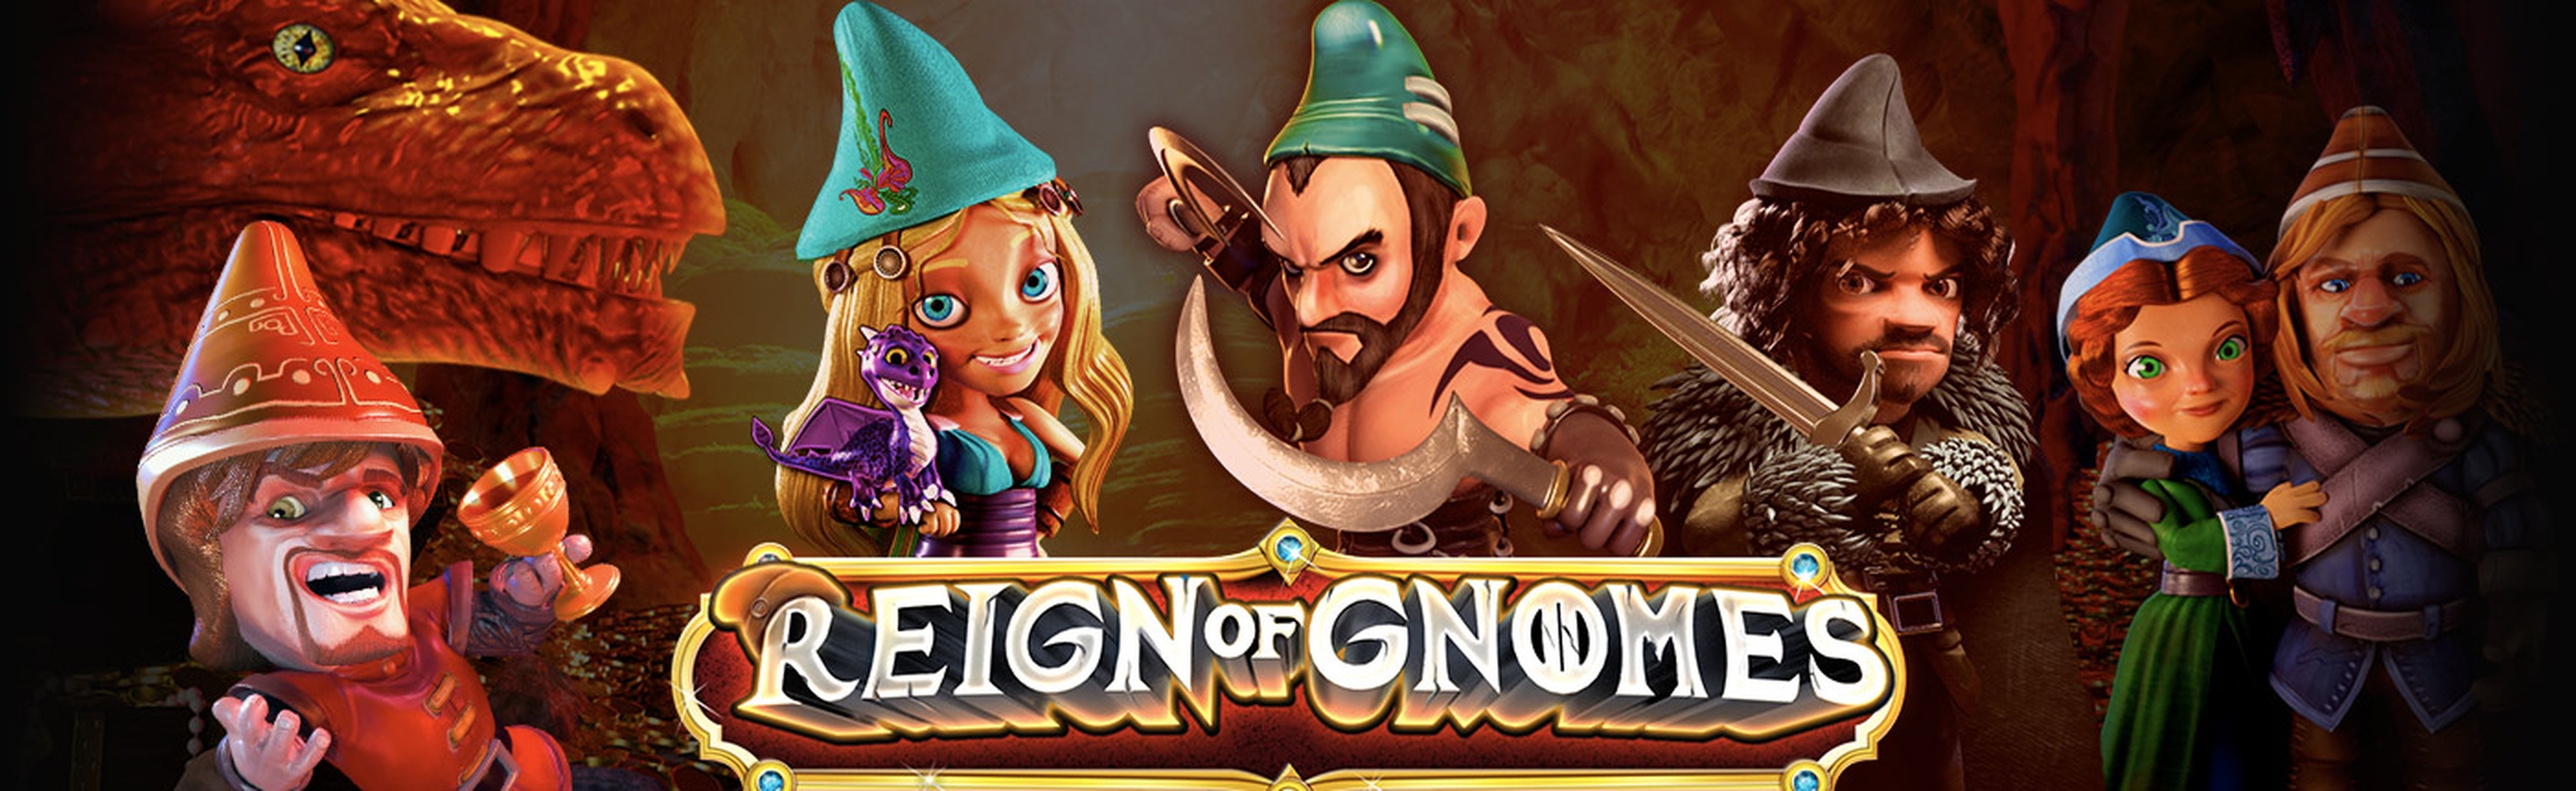 Reign of Gnomes demo